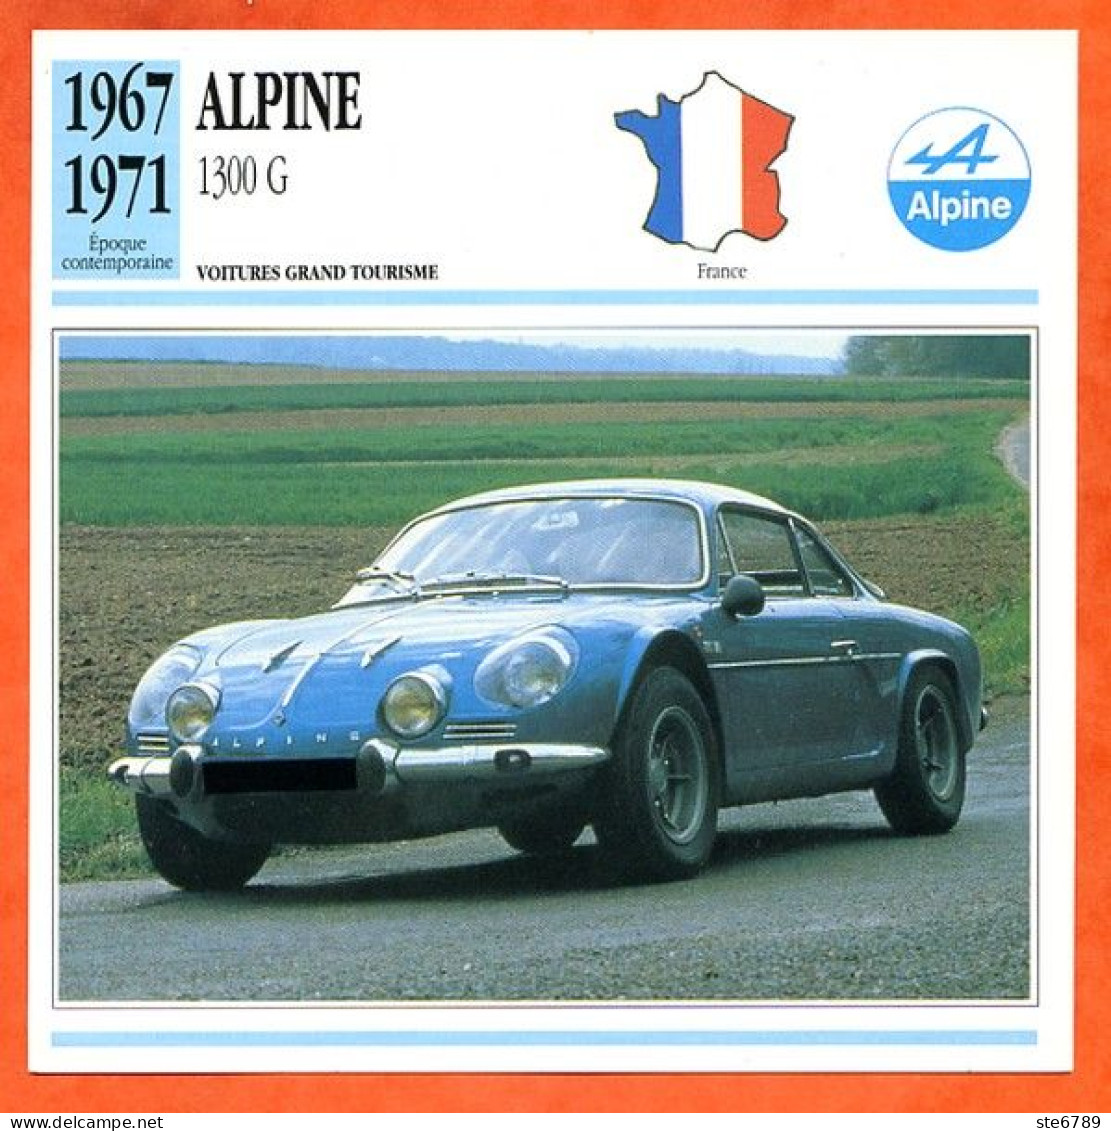 ALPINE 1300 G 1967  Voiture Grand Tourisme France Fiche Technique Automobile - Coches